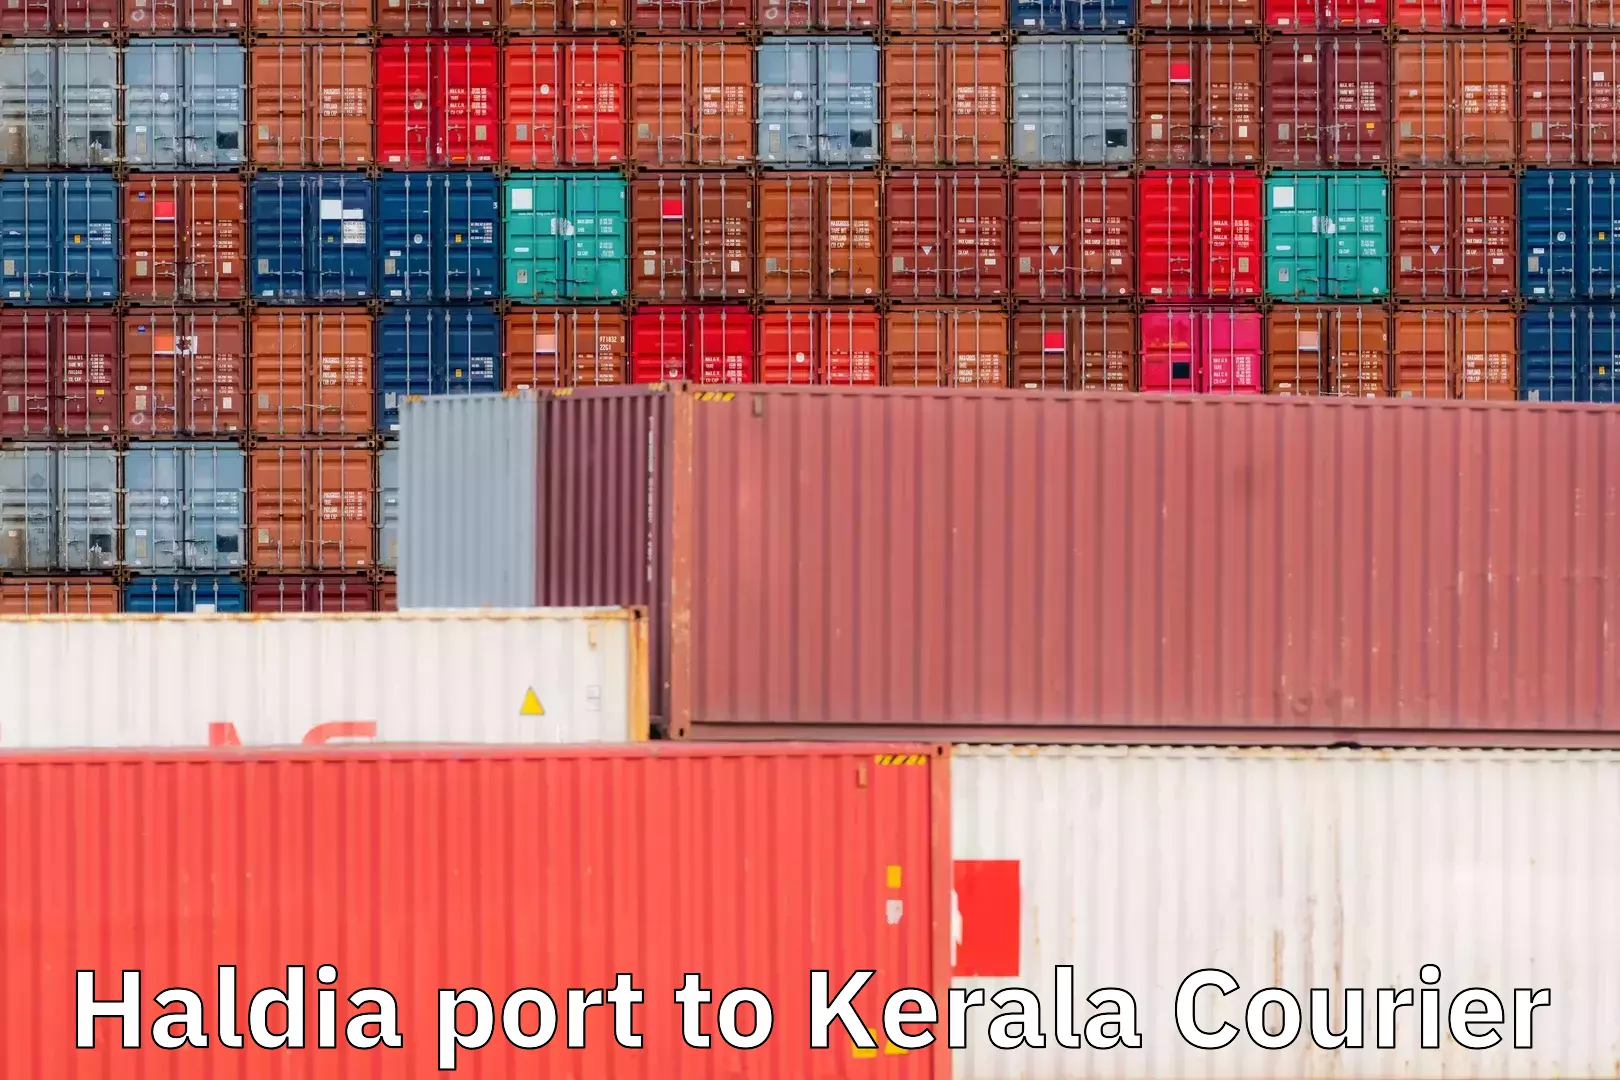 Cash on delivery service Haldia port to Kerala